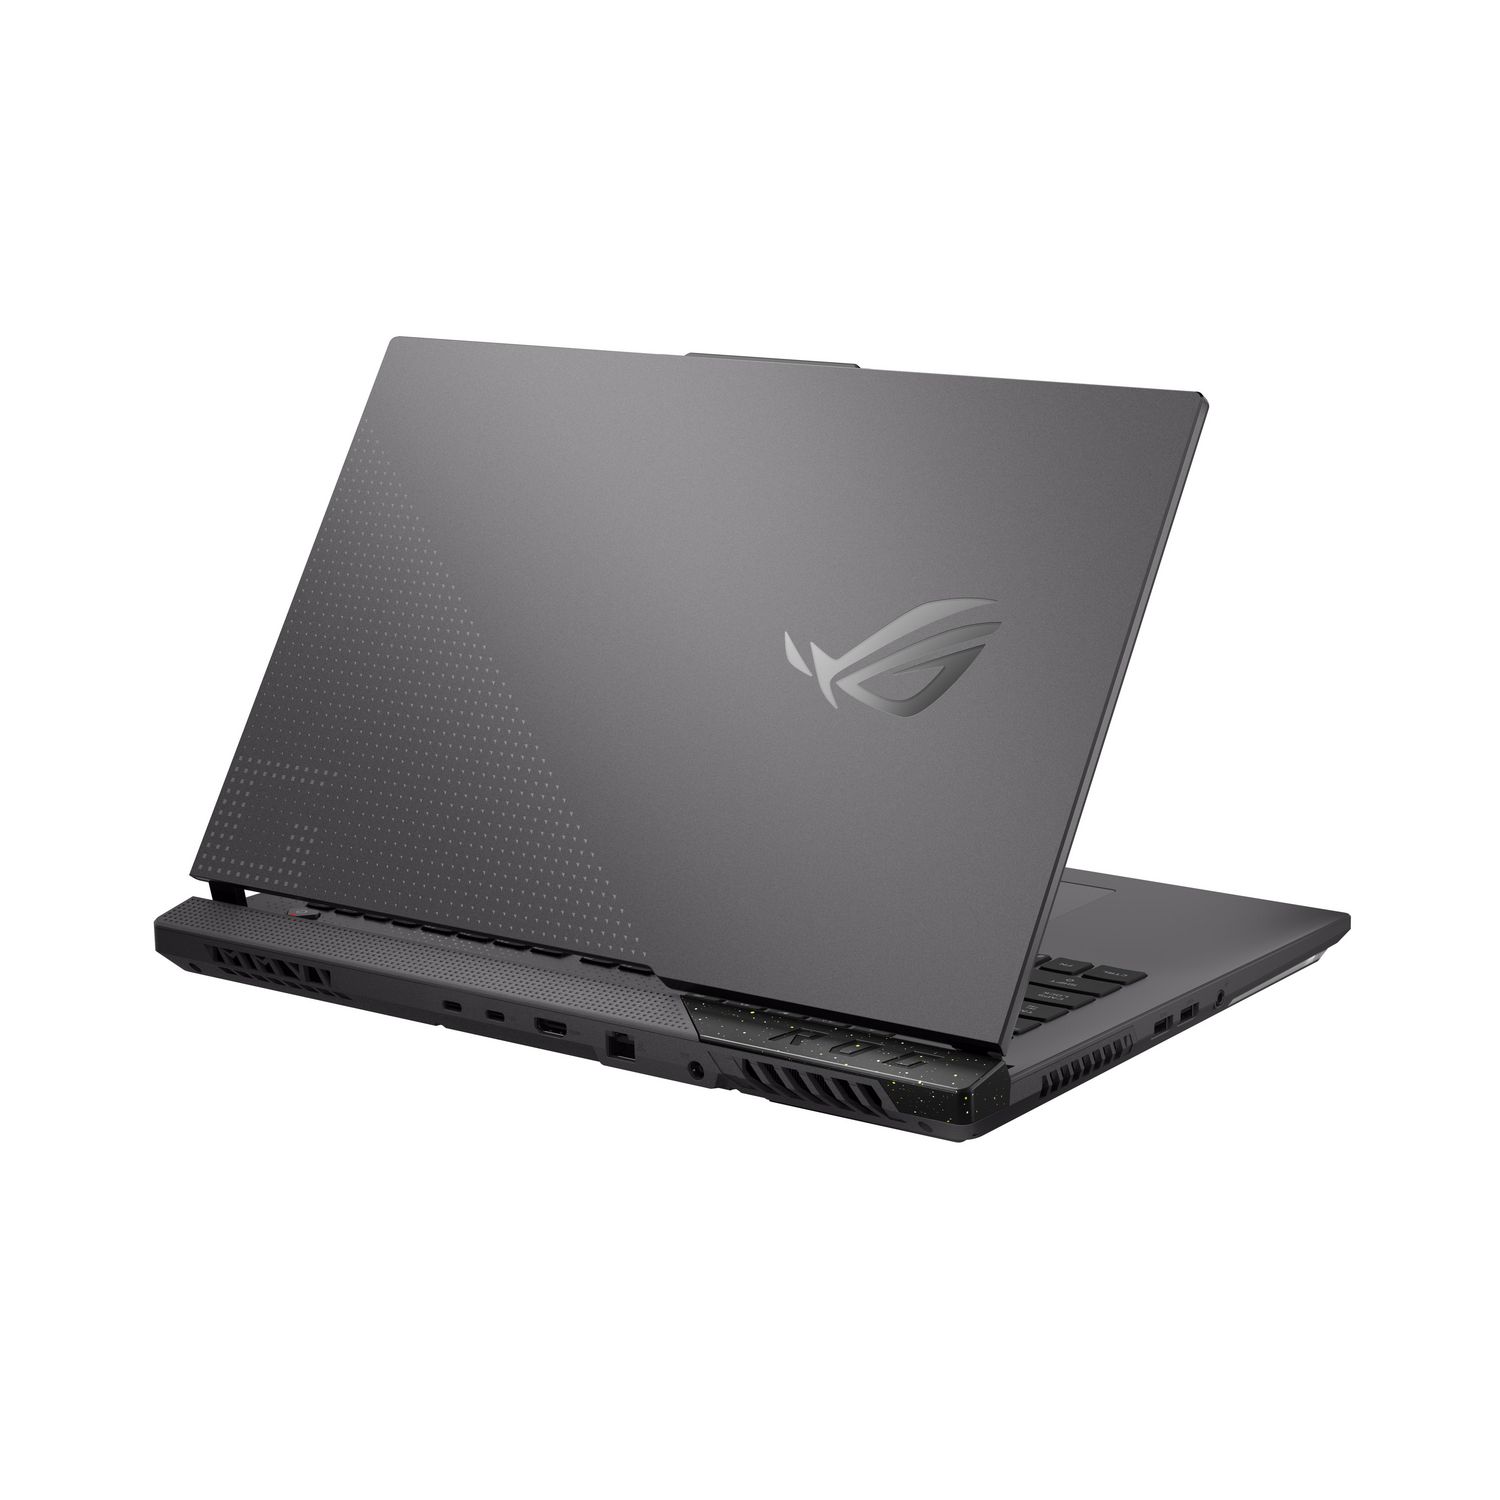 ASUS ROG Strix G17 Gaming Laptop, 17.3” FHD 144Hz, GeForce RTX